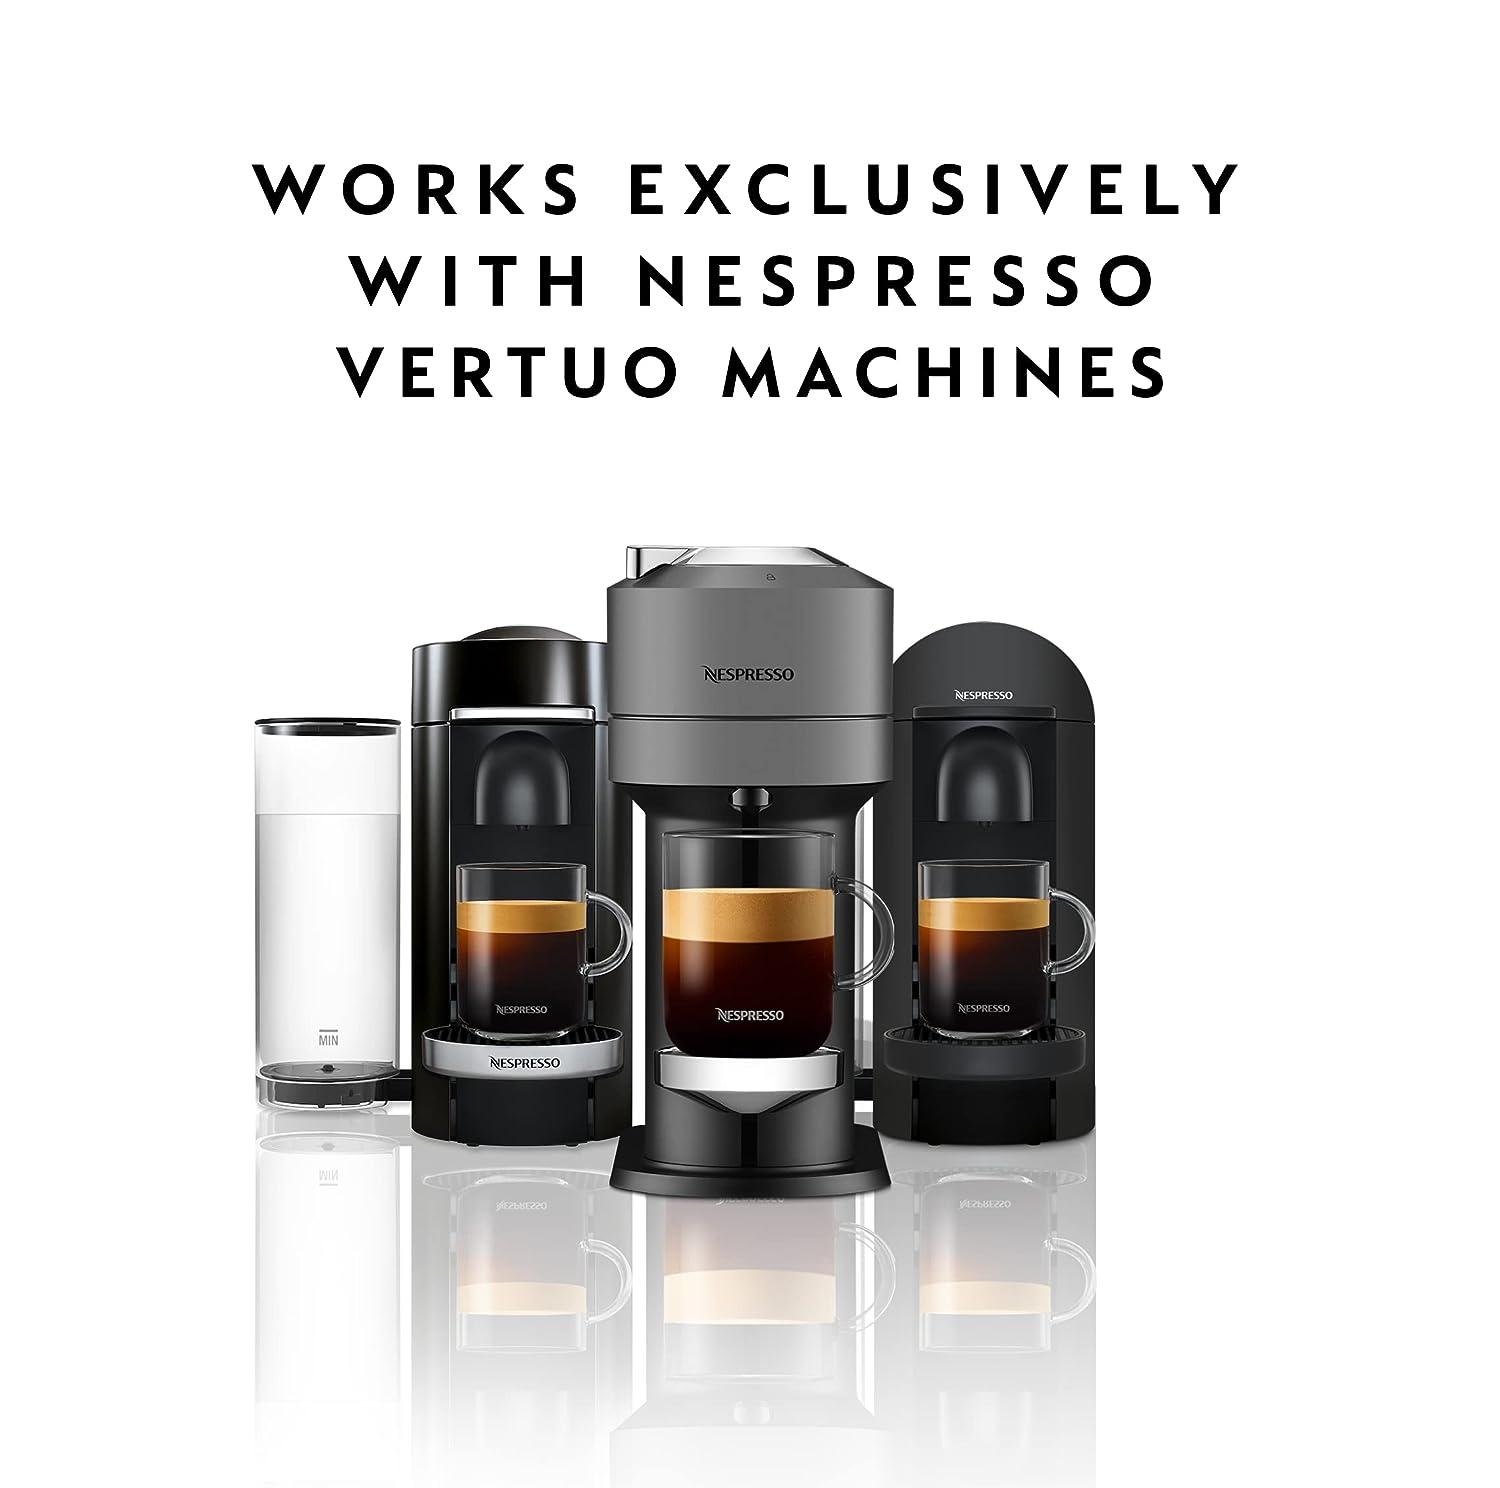 Coffee Pod Review: Nespresso Original vs. Nespresso Vertuo